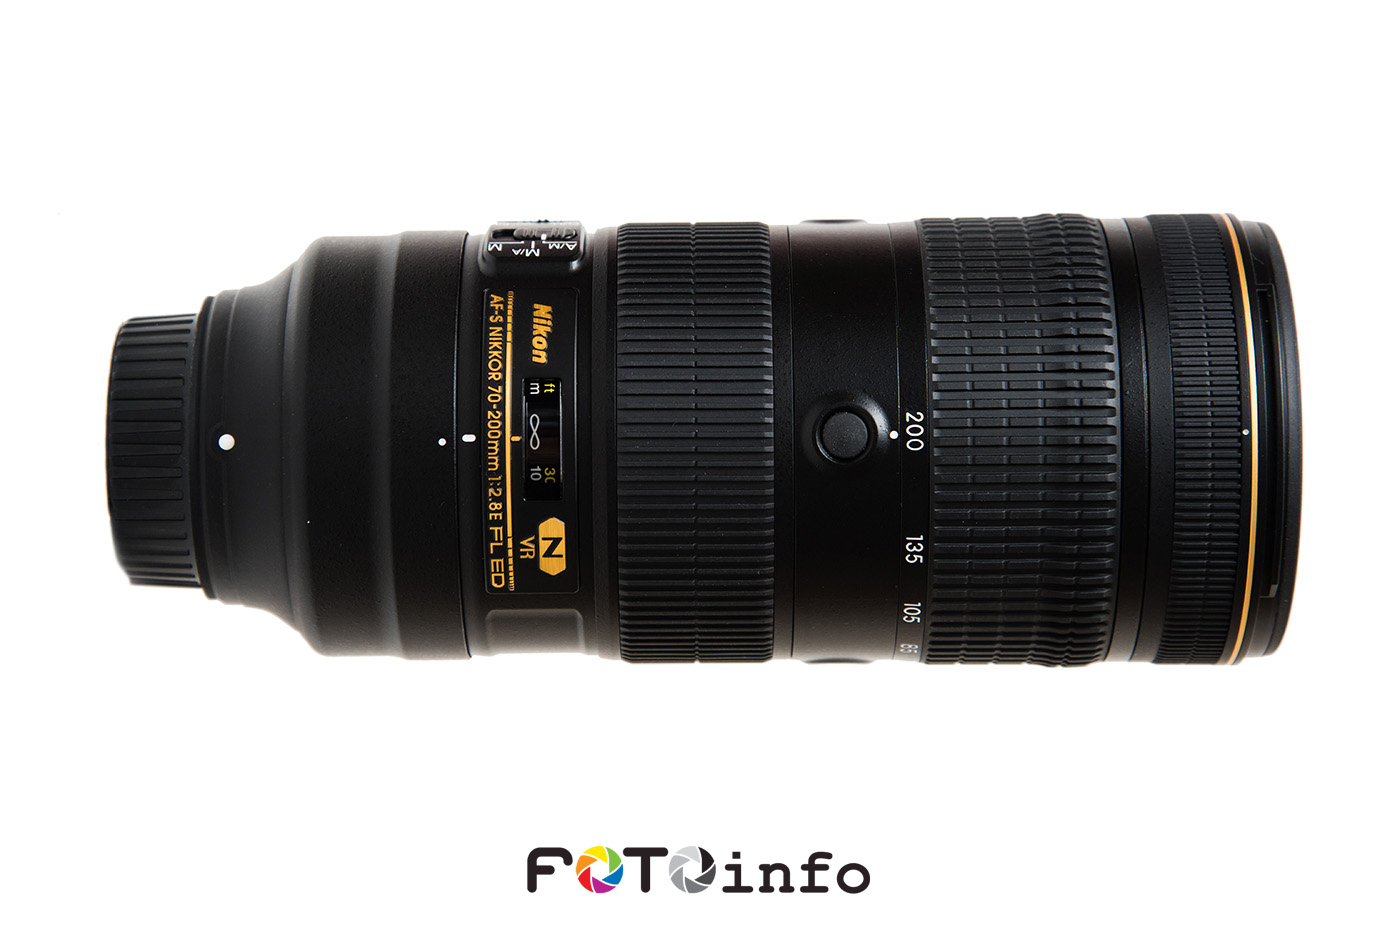 Af s nikkor 70 200mm f 28 e fl ed Nikon Af S Nikkor 70 200mm F 2 8e Fl Ed Vr Lens Review Nikon Rumors